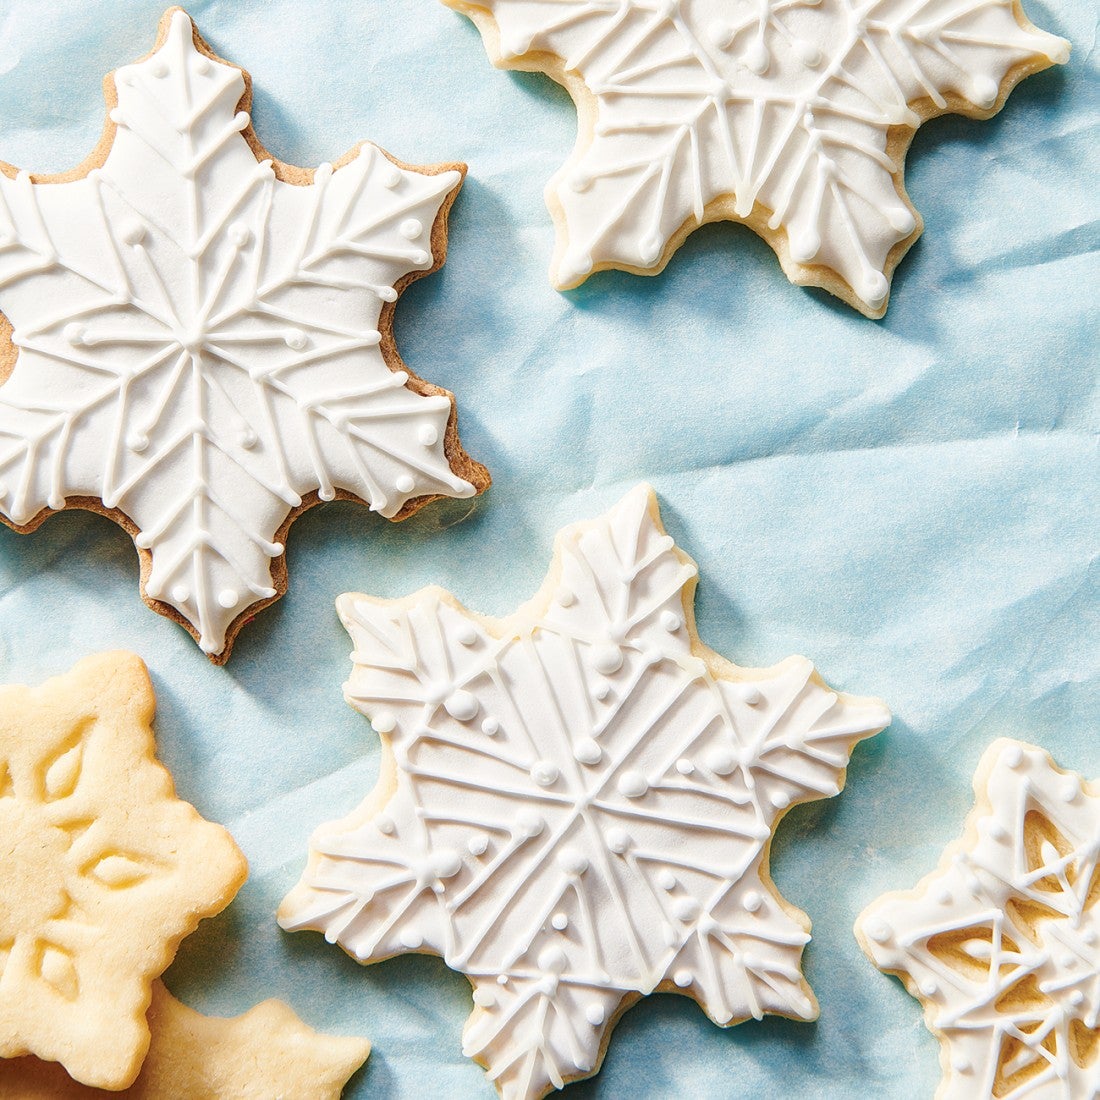 Mini Pie Maker for Christmas Party Baking Supplies, Snowflake